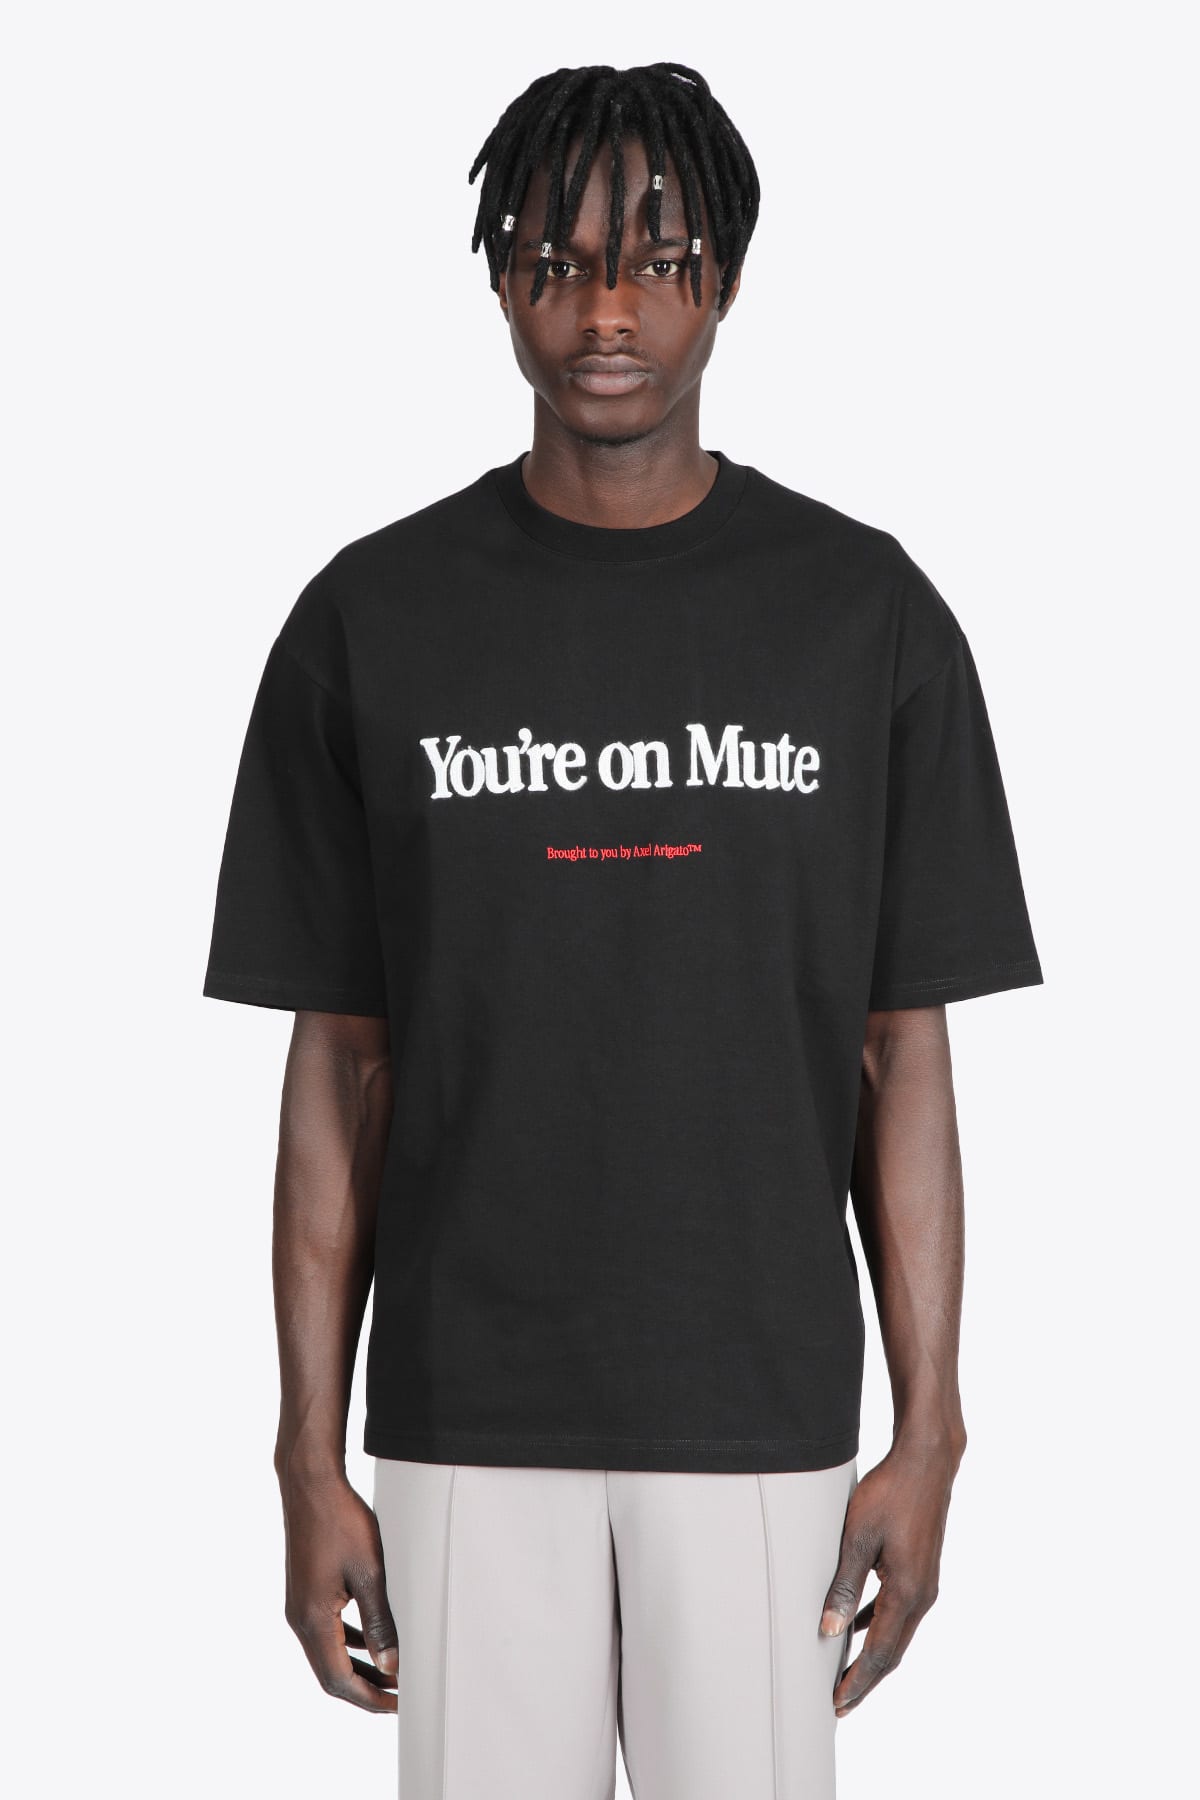 Axel Arigato Mute T-shirt Black cotton t-shirt with slogan - Mute T-shirt